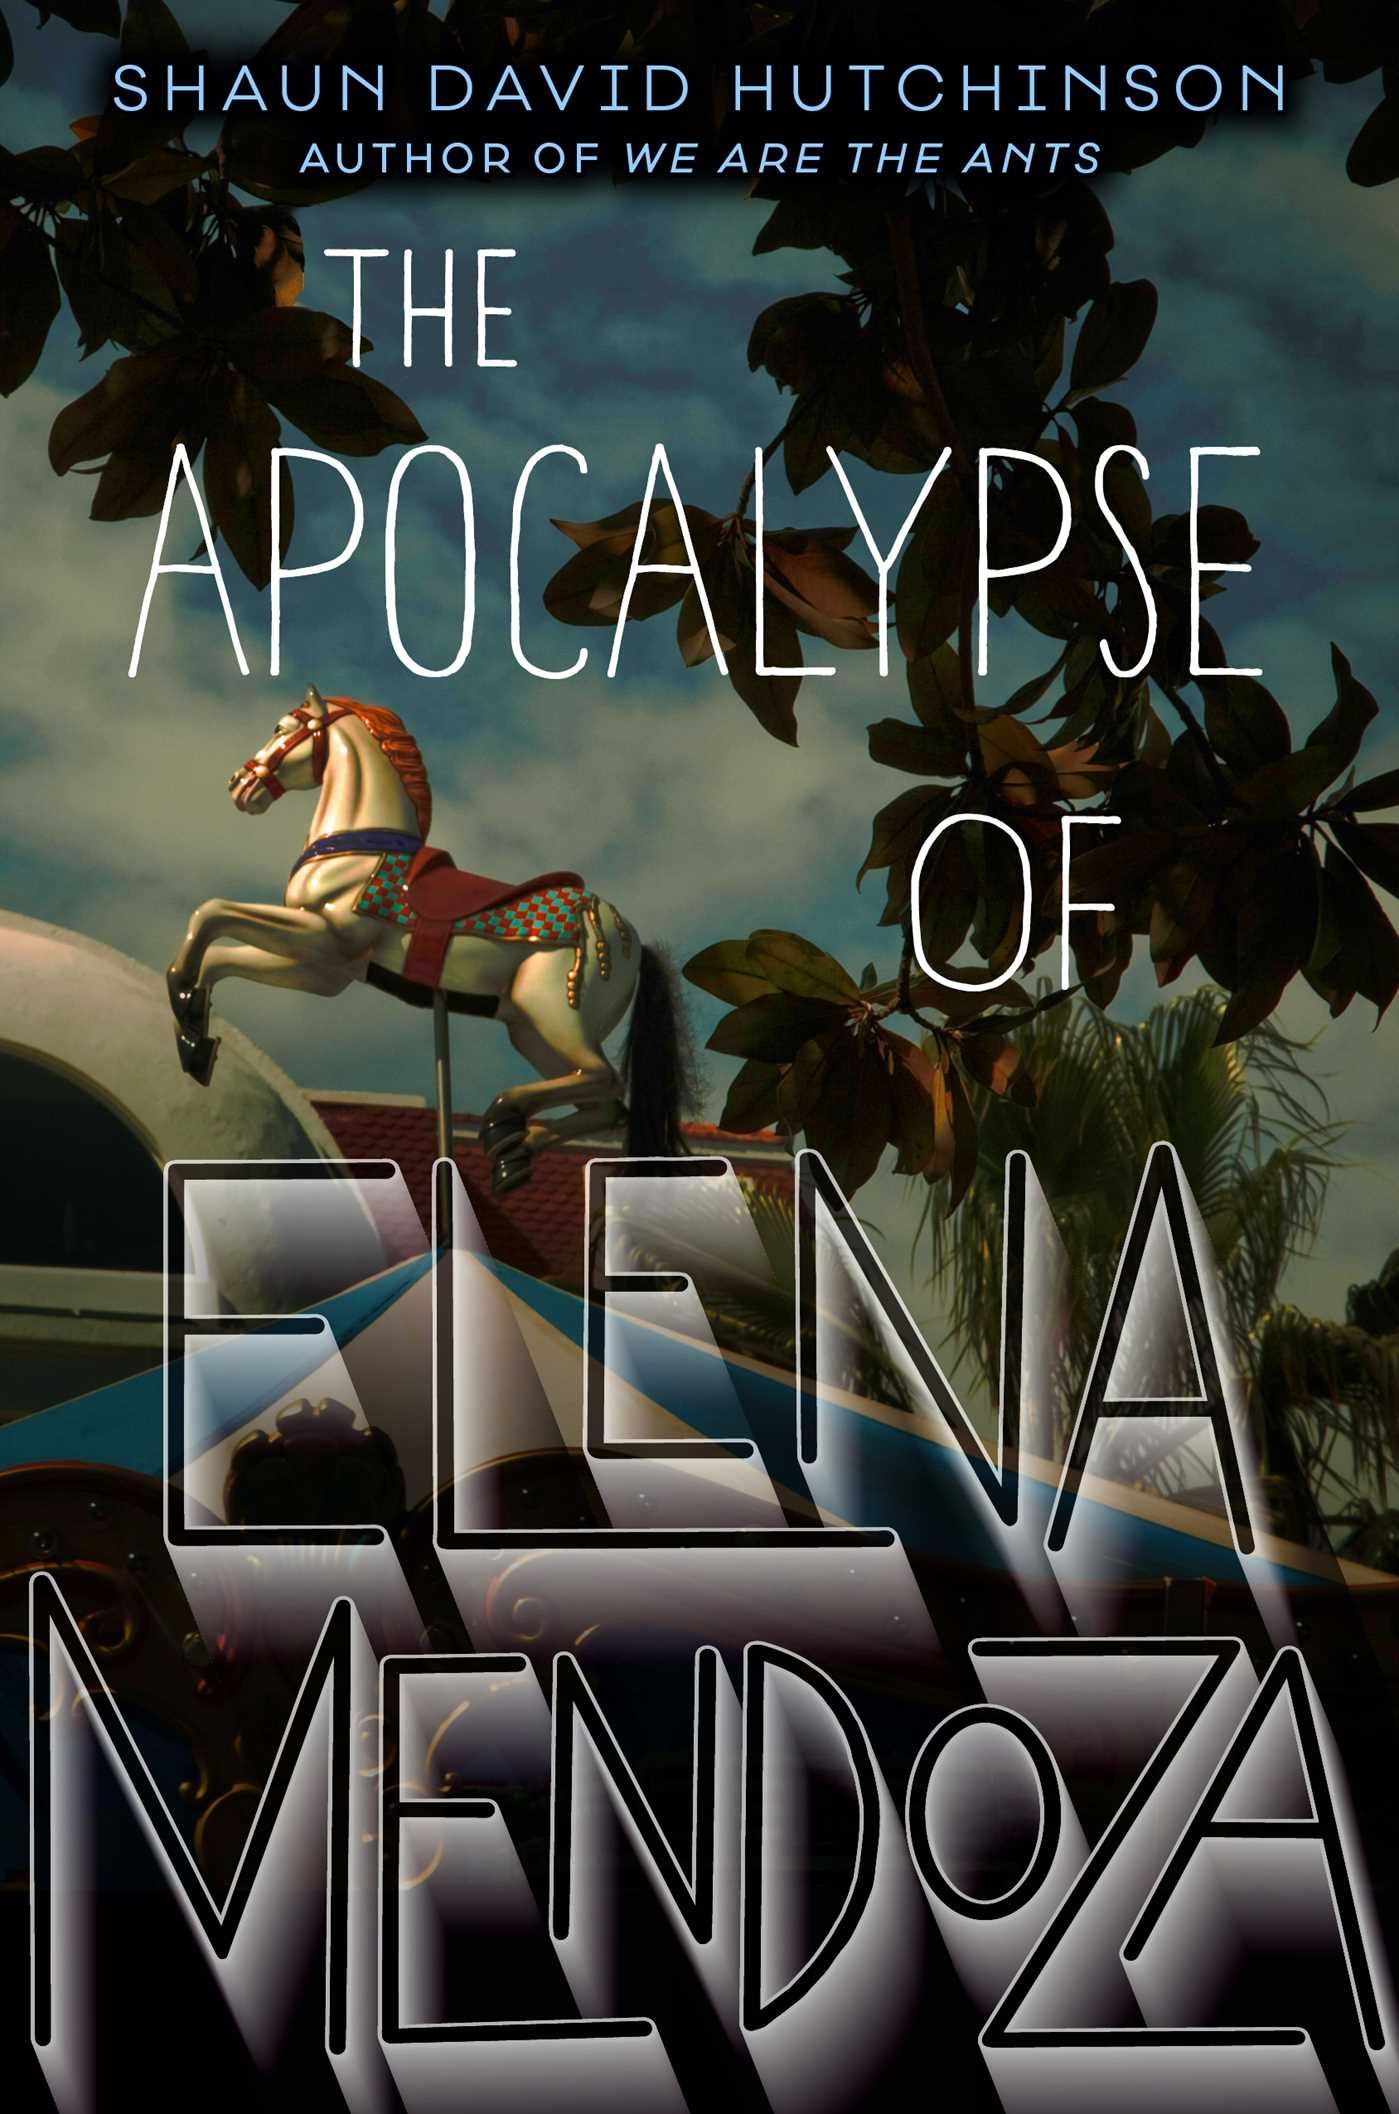 A book cover for The Apocalypse of Elena Mendoza